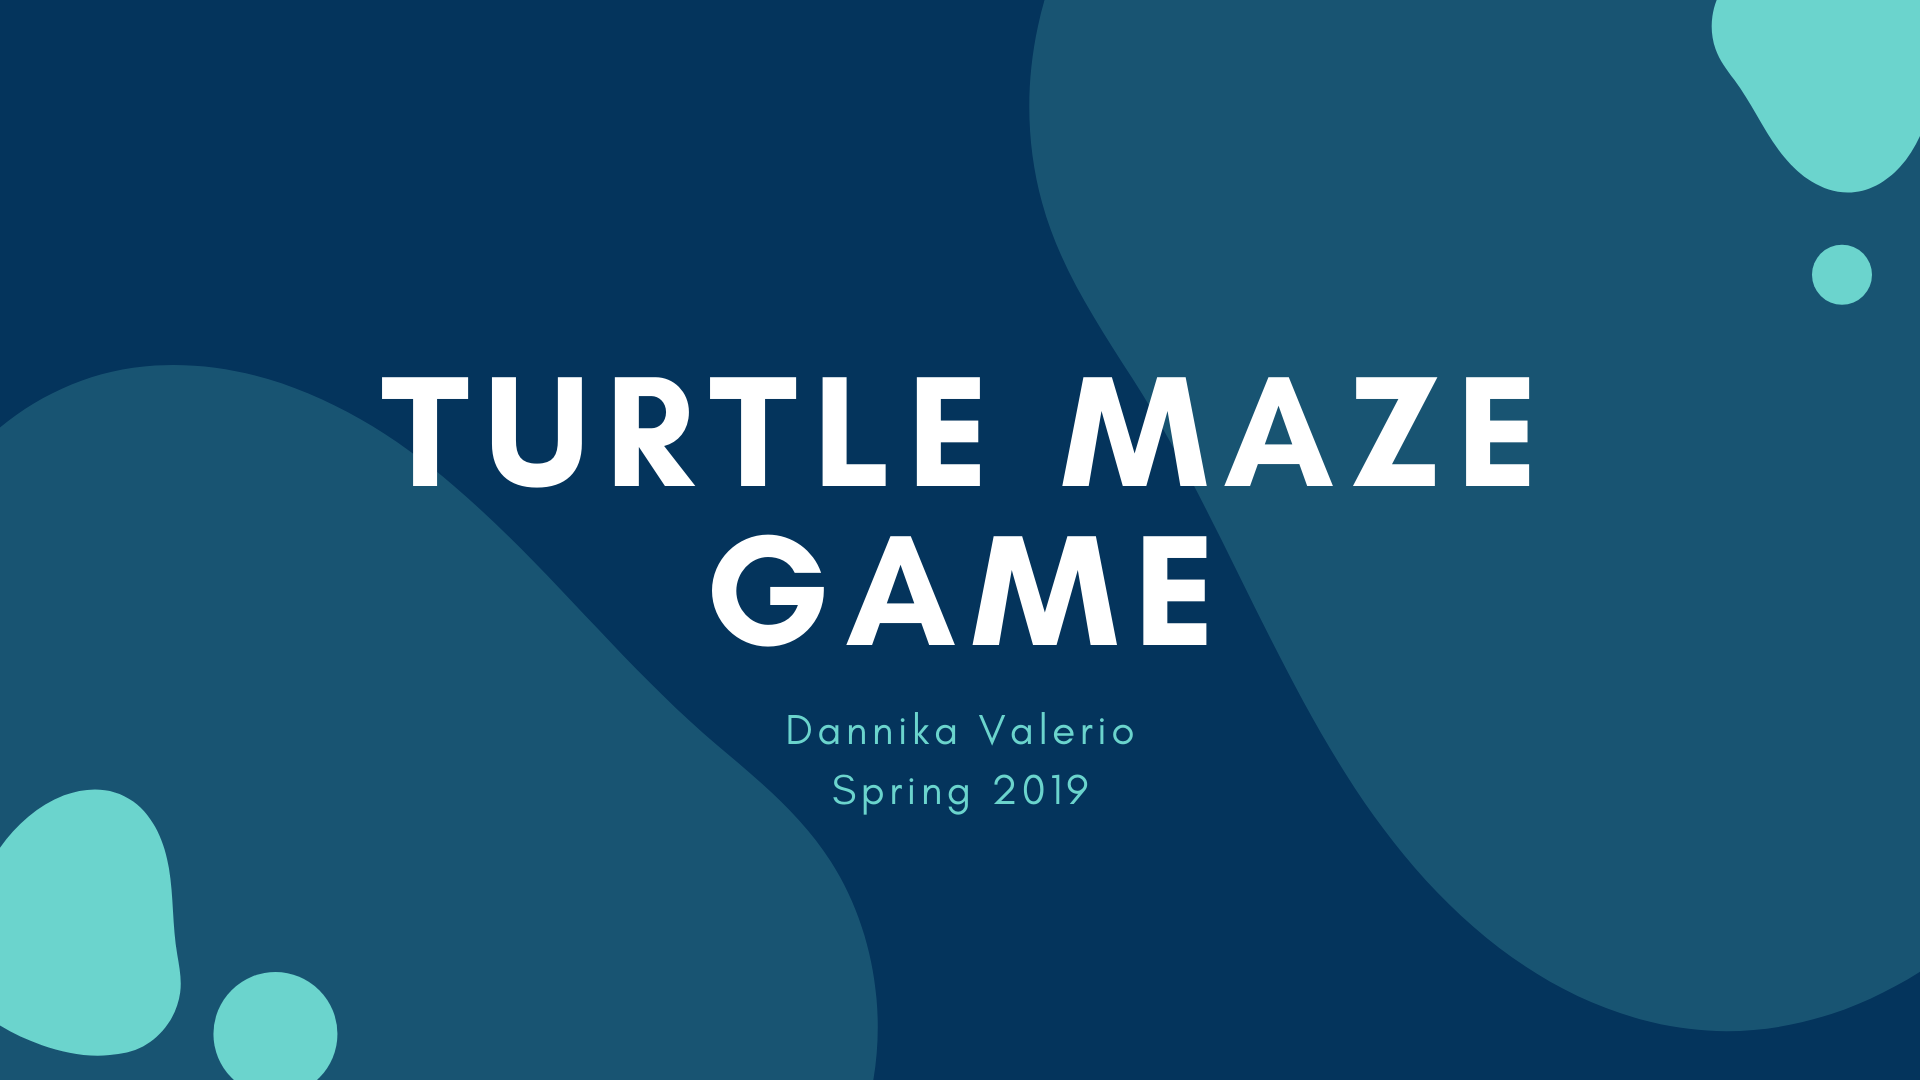 Turtle Maze Game Image